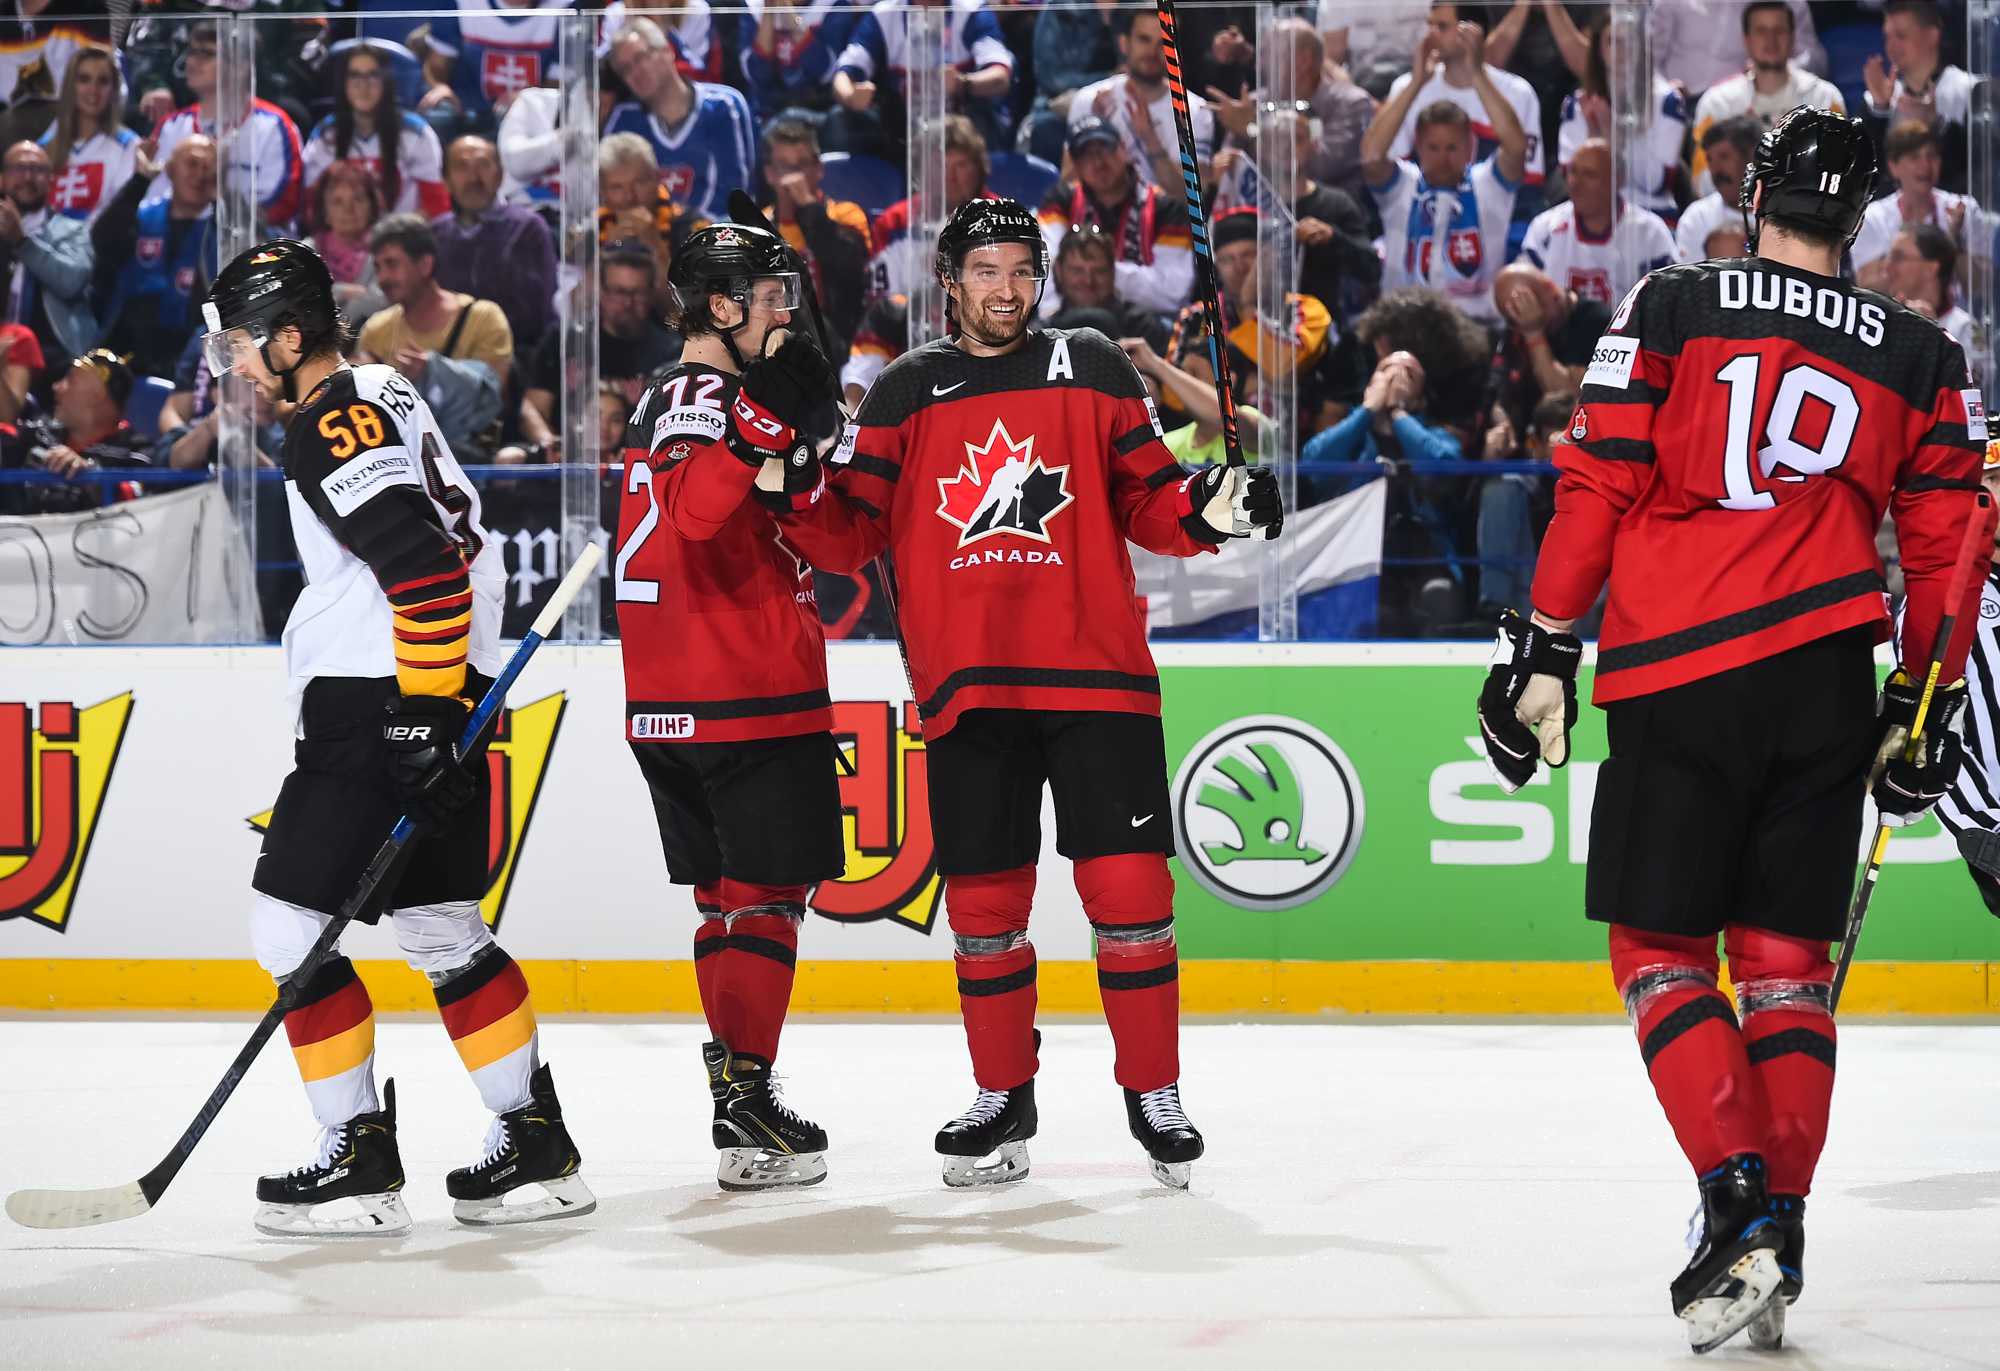 IIHF - Gallery: Canada vs. Germany - 2019 IIHF Ice Hockey World ...